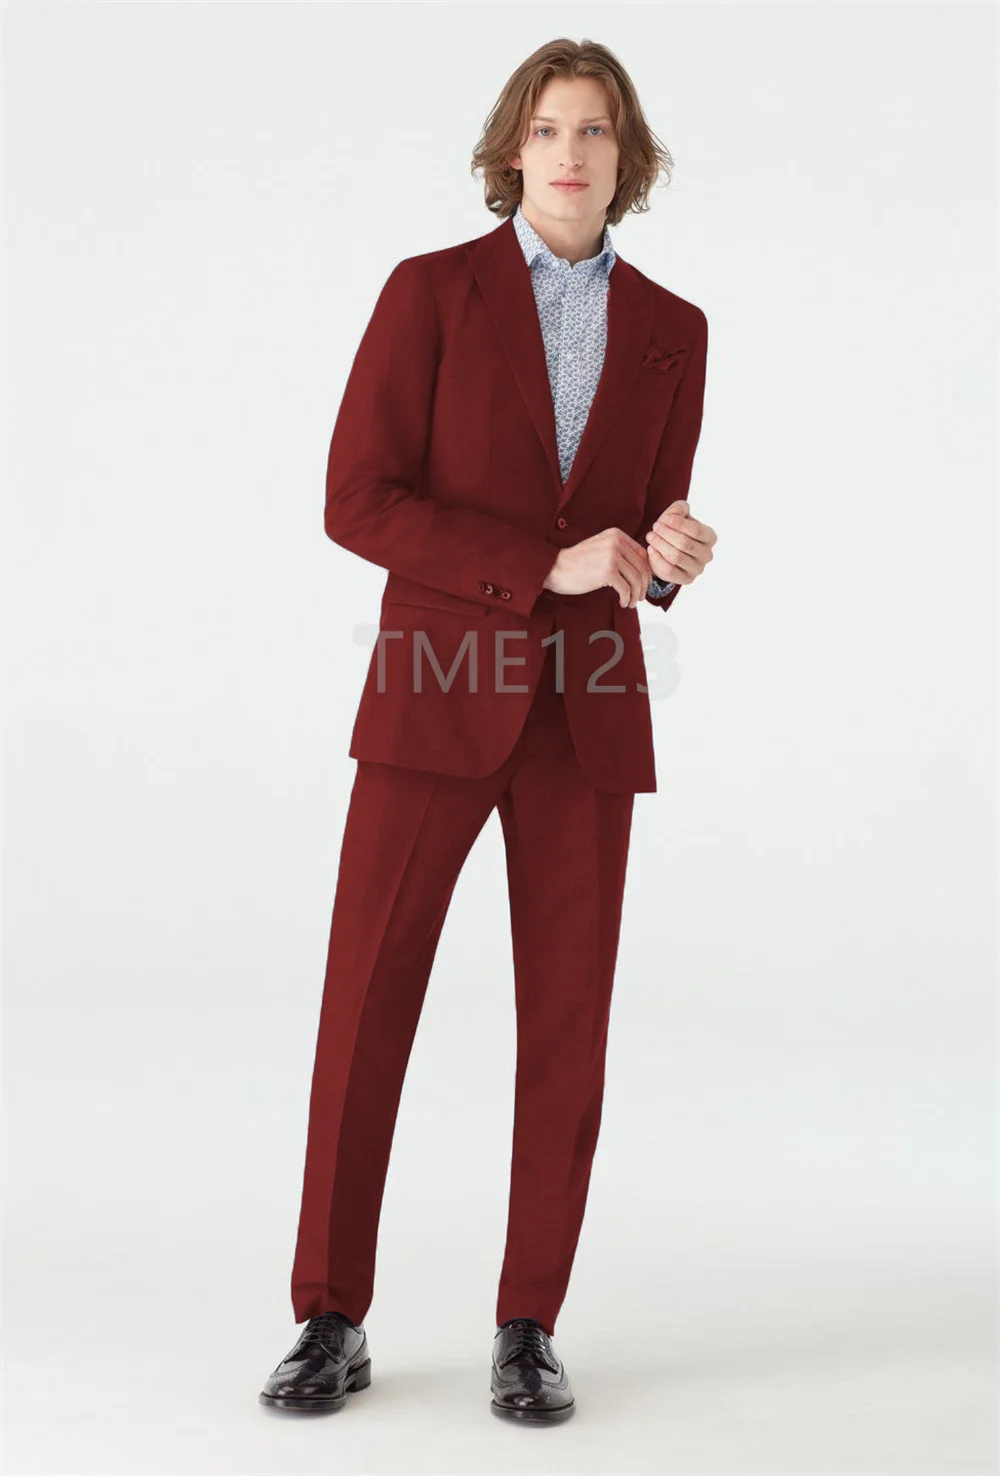 Blazers Pants Sets / 2022 New Fashion Groom Wedding Dress Suits / Men's Casual Business 2 Piece Suit Jacket Coat Trousers